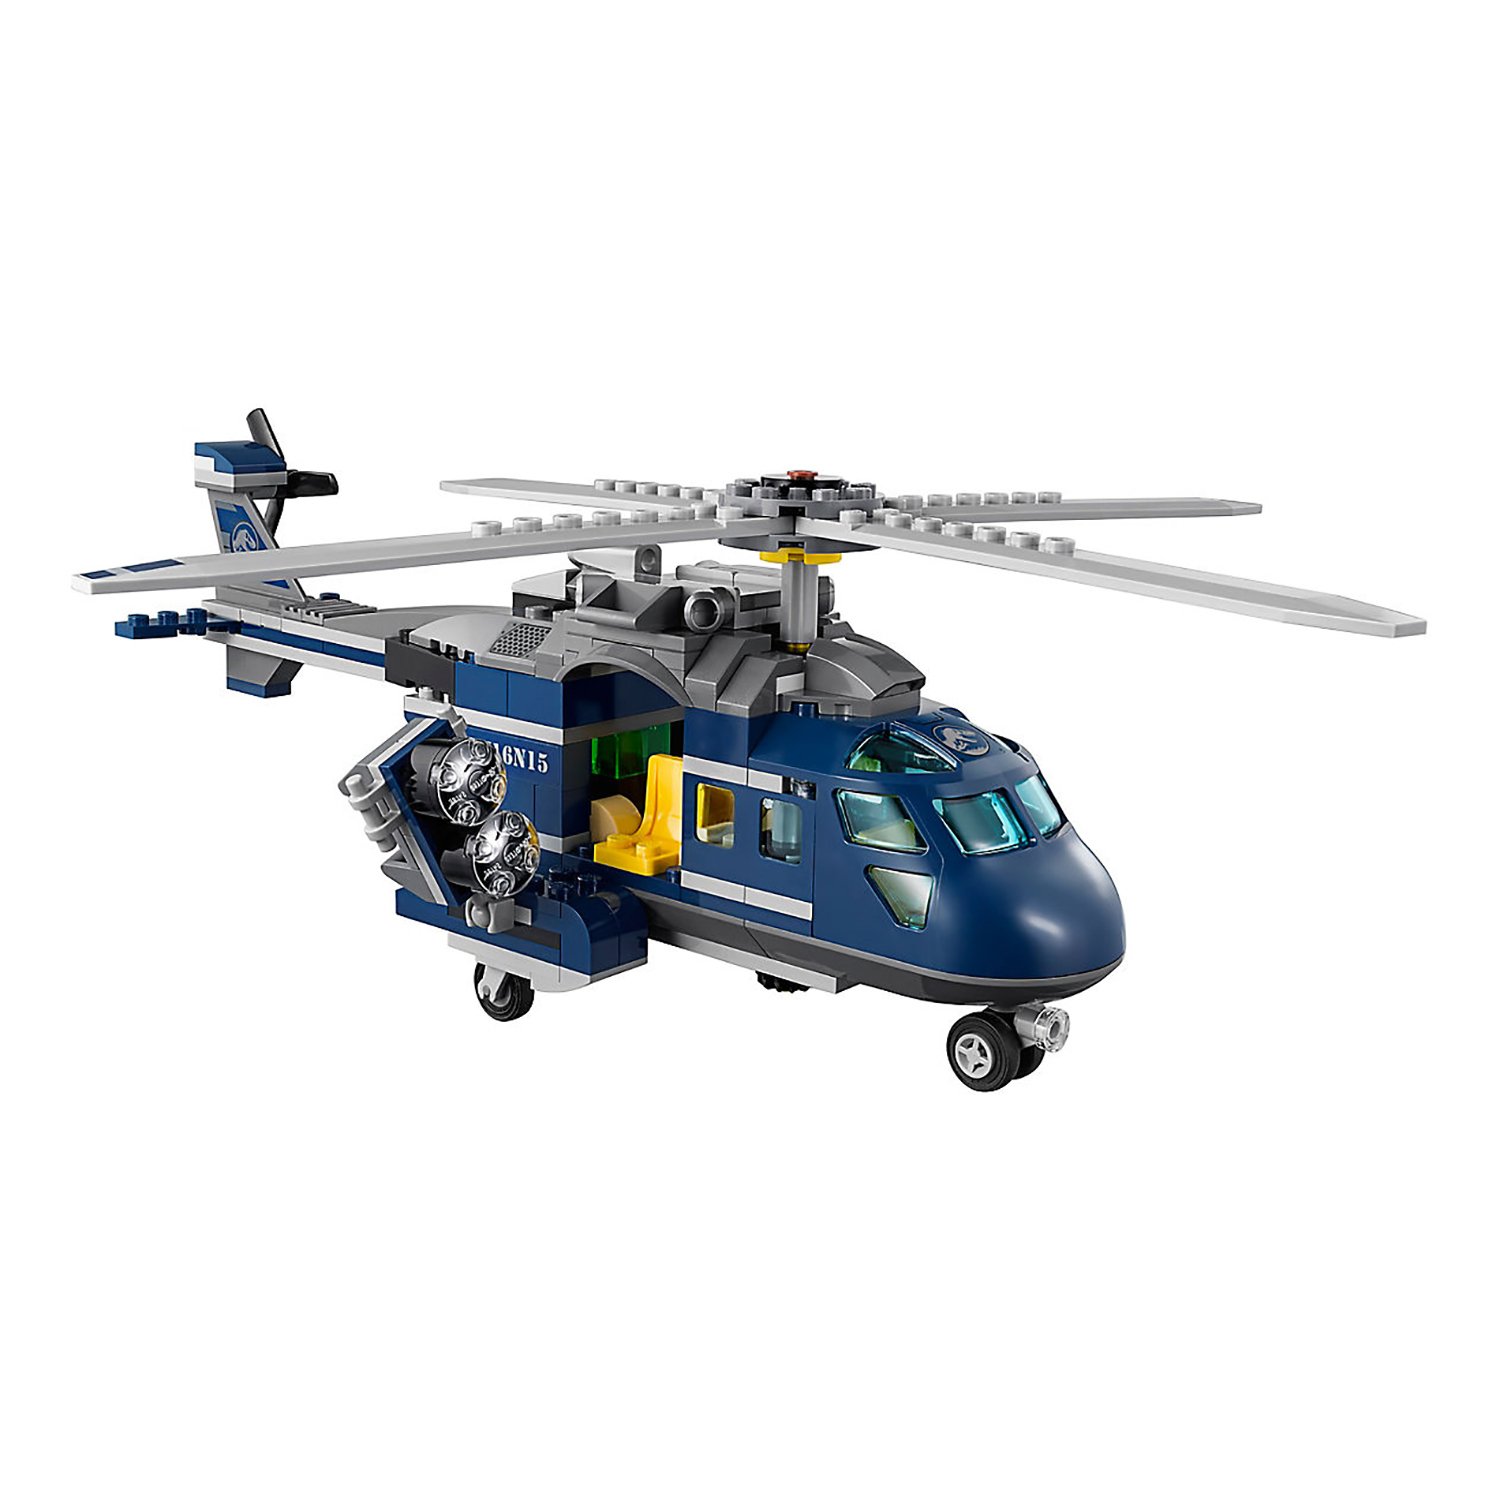 Конструктор LEGO Jurassic World «Погоня за Блю на вертолёте» 75928, 397 деталей